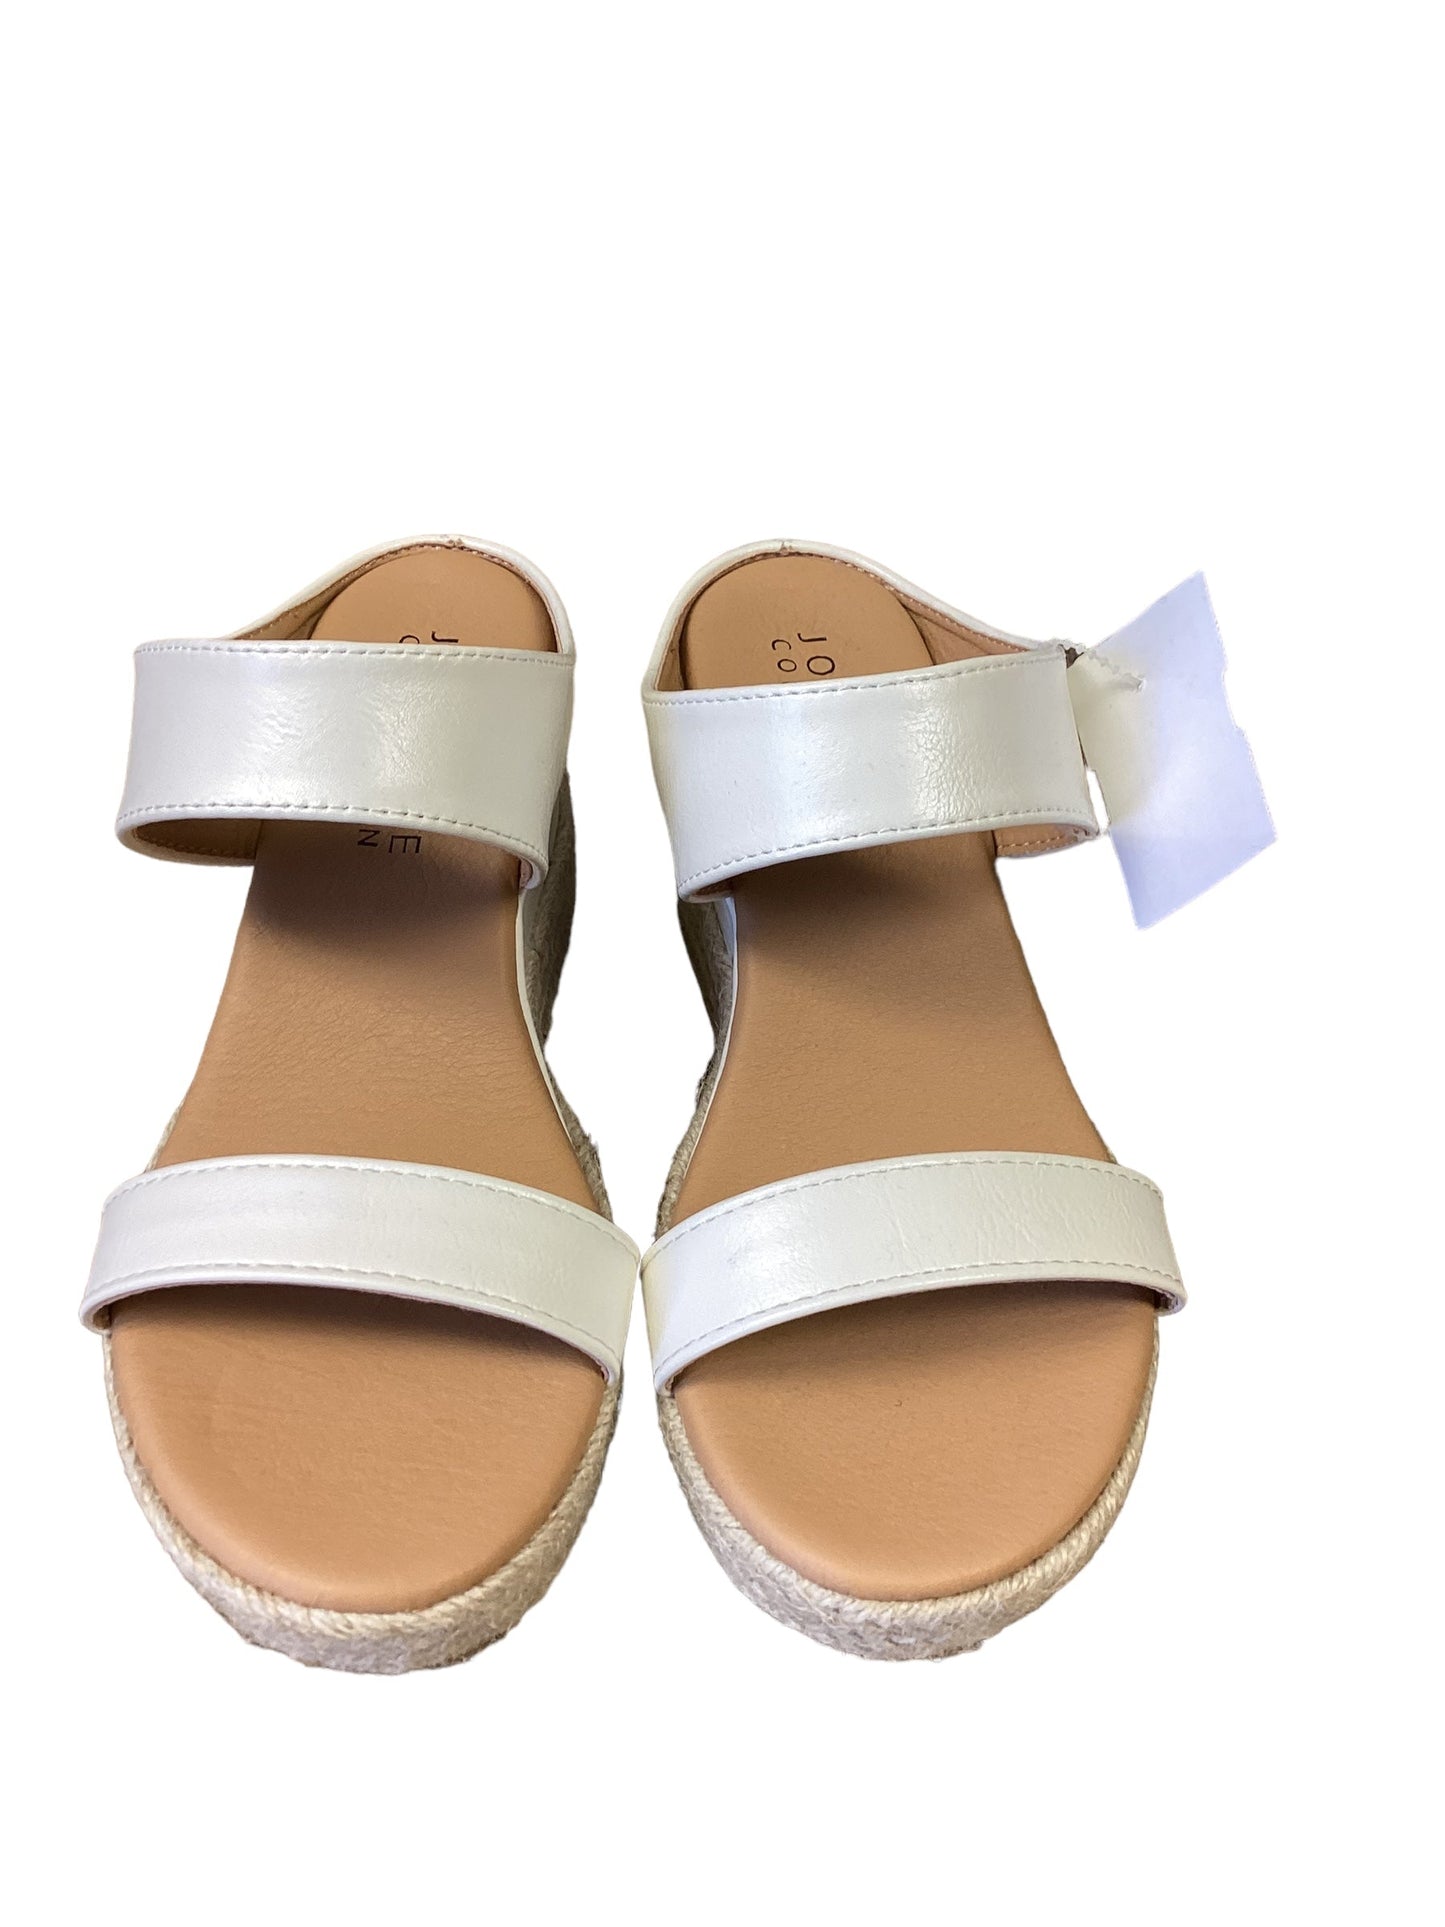 White Sandals Heels Wedge Journee, Size 6